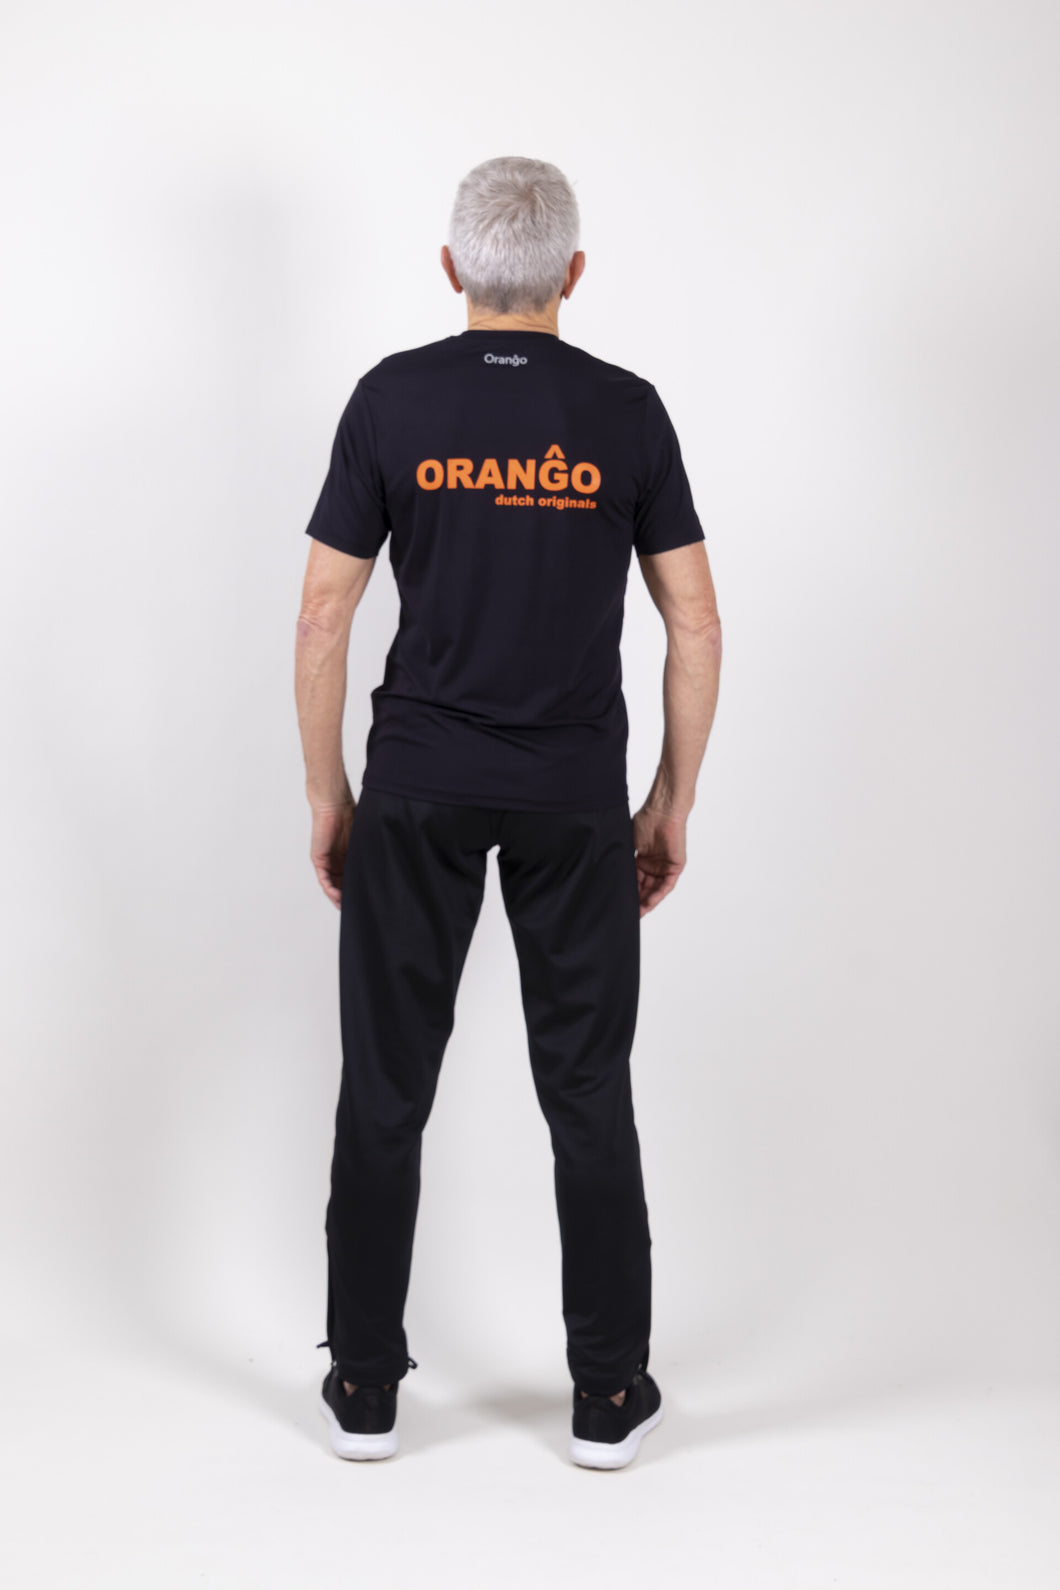 Orango Running - Mens T-shirt short sleeve V-neck -  Regular Fit - Black - Print: Dutch Originals - P010-1012G